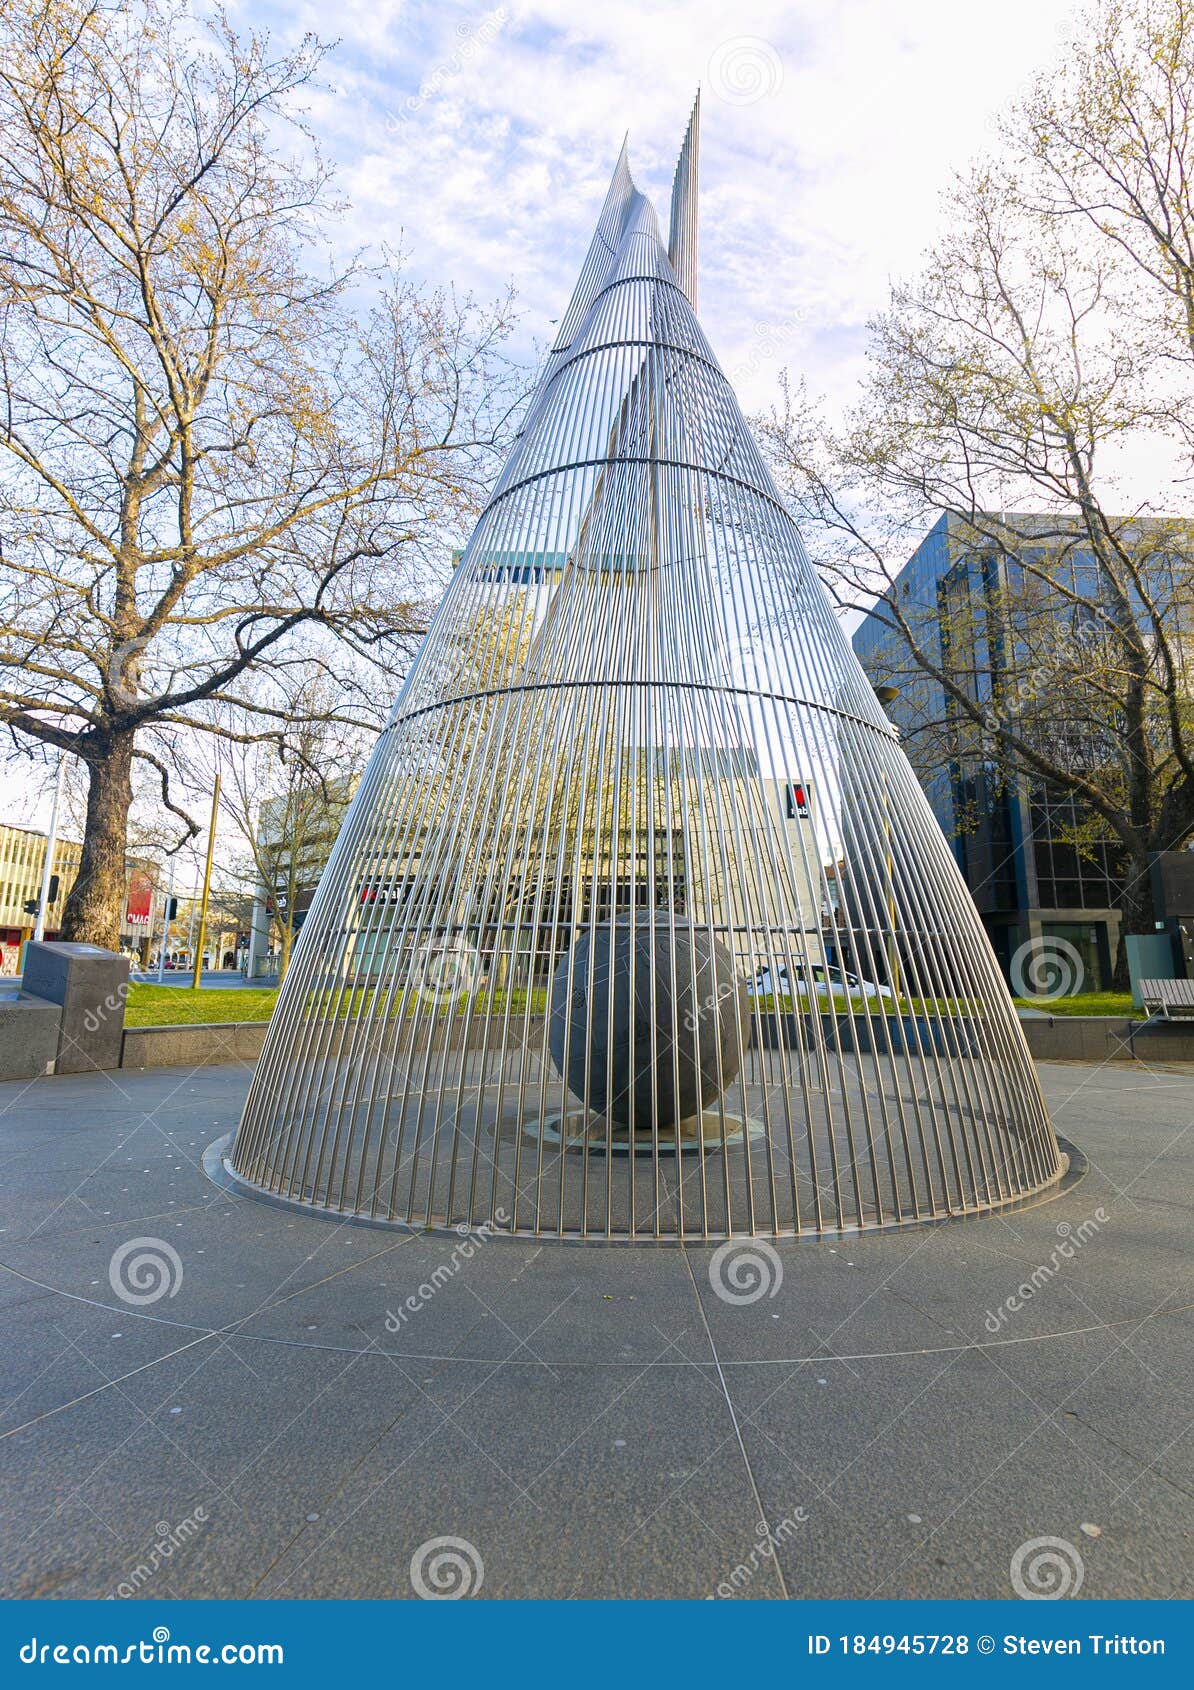 ACT Memorial Public Art Structure in Civic, Canberra, Australia